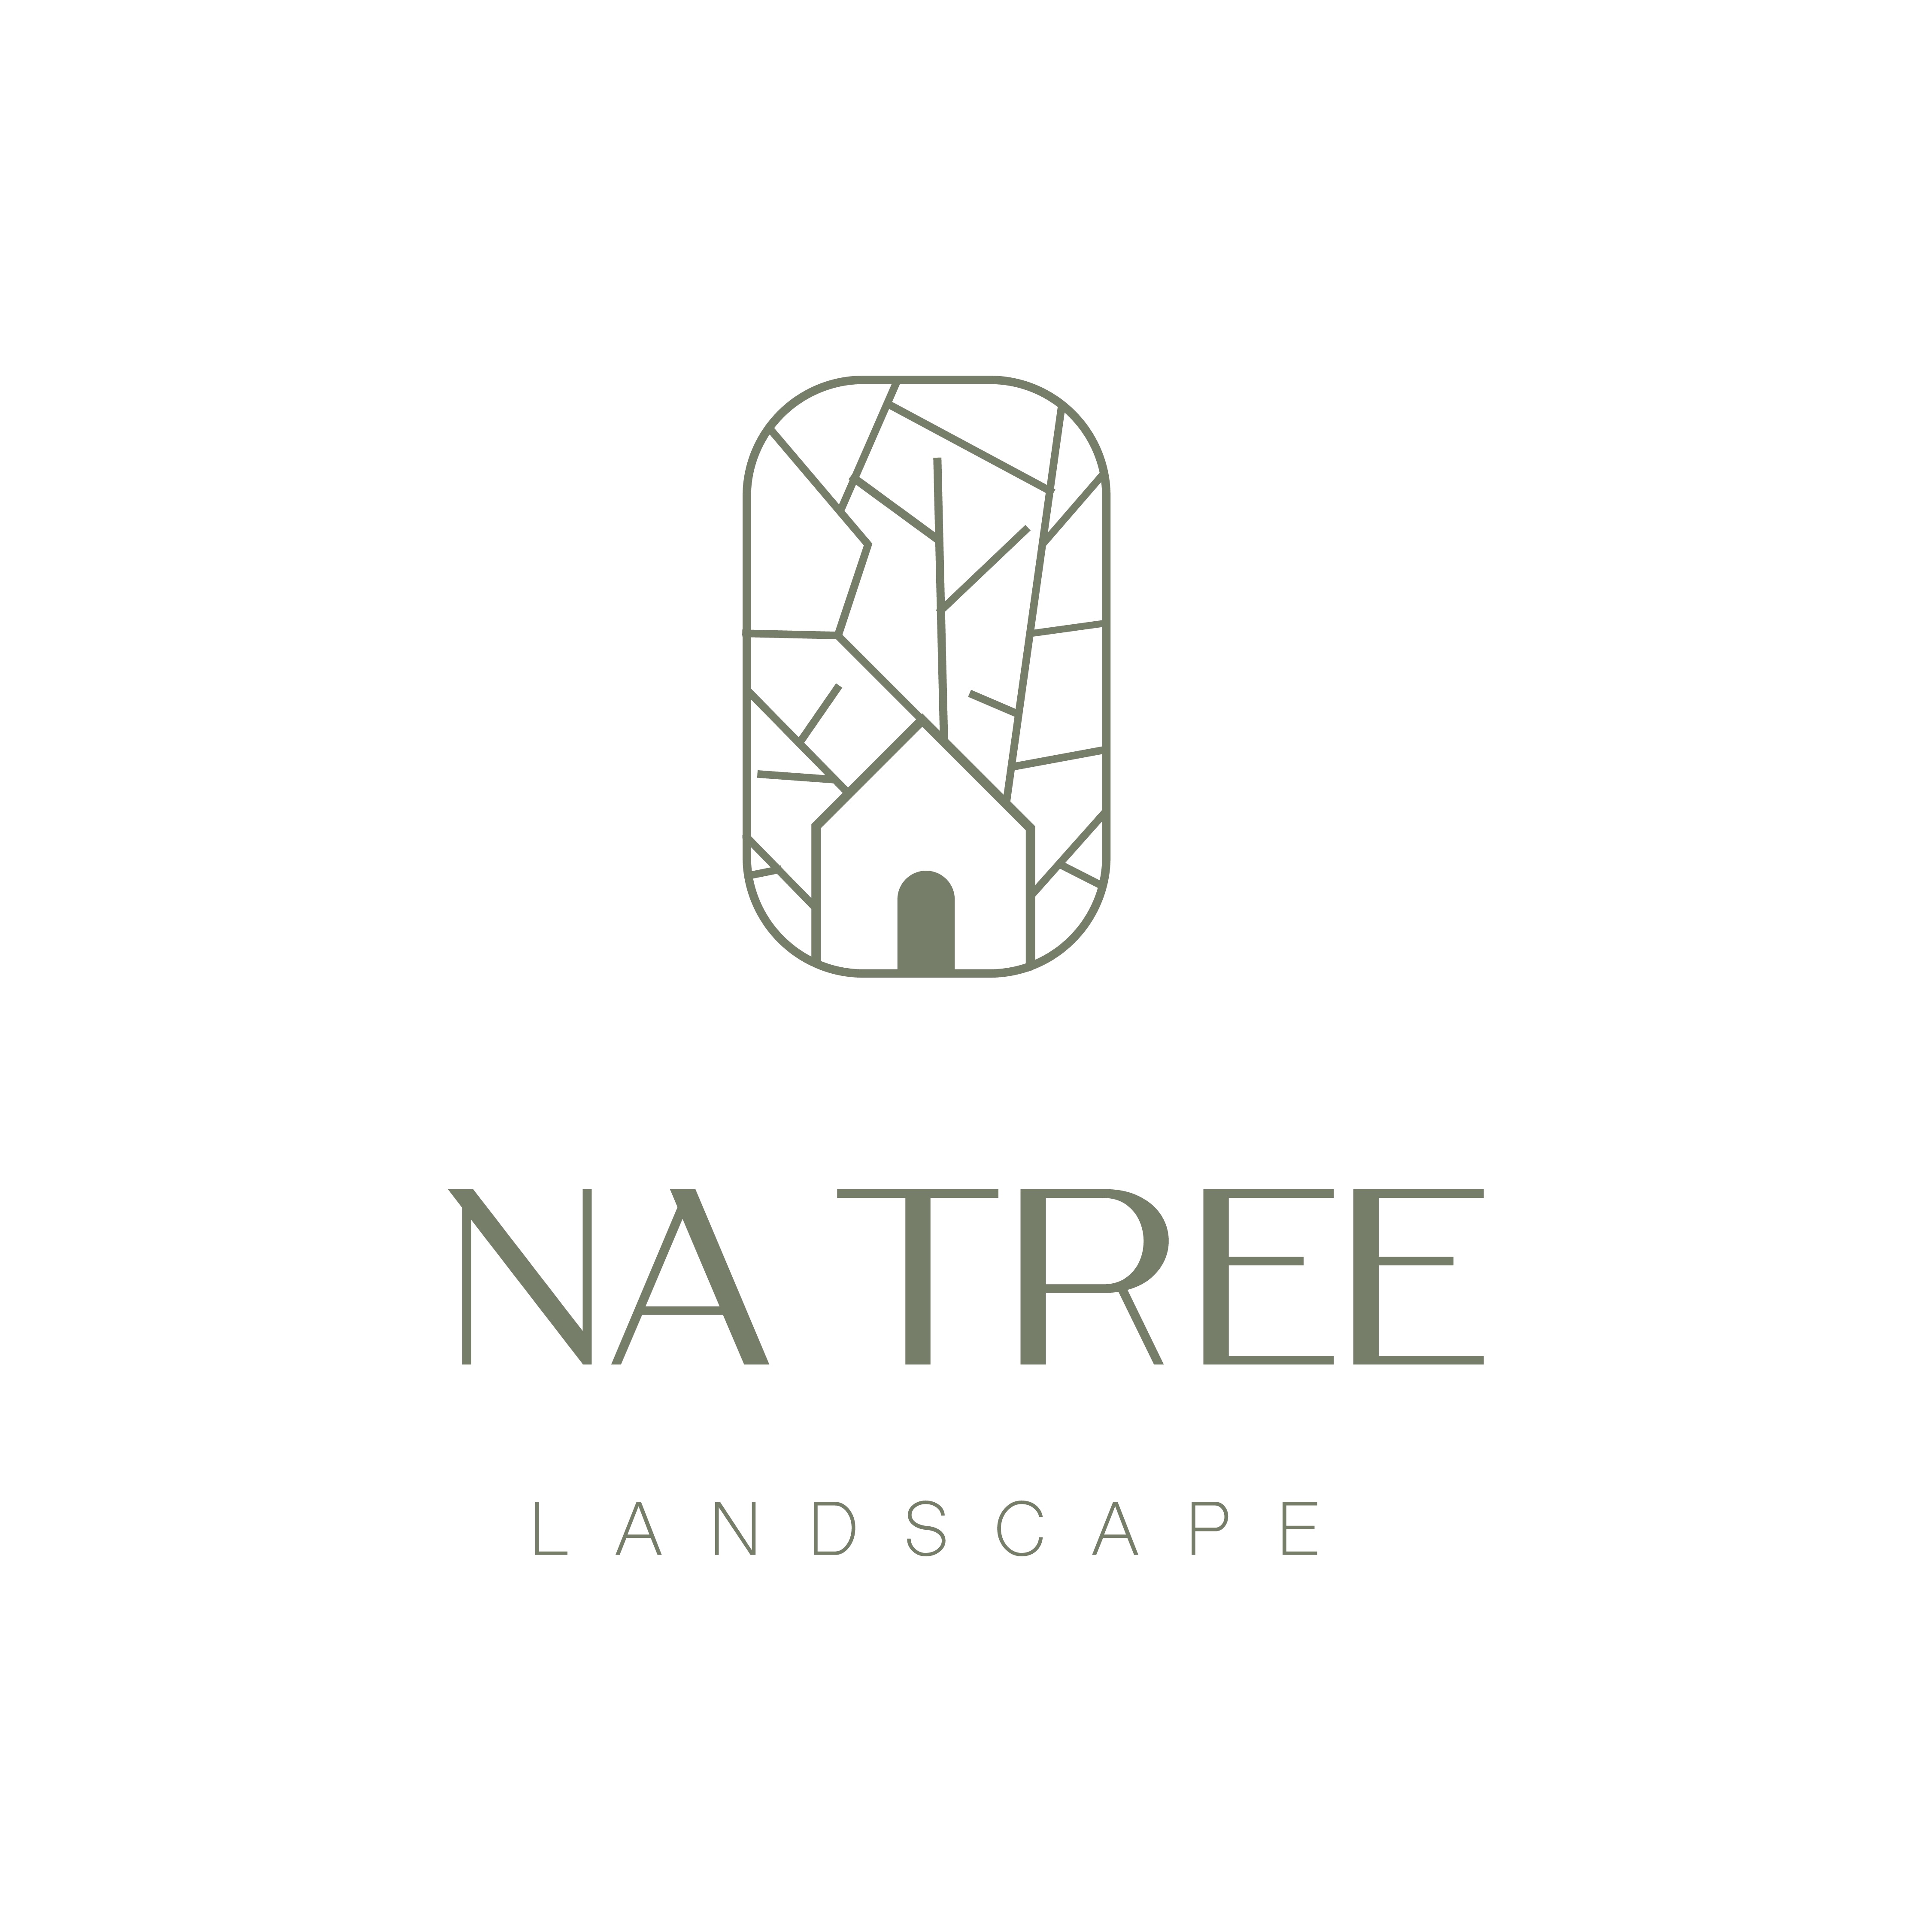 NatreeLandscape Logo